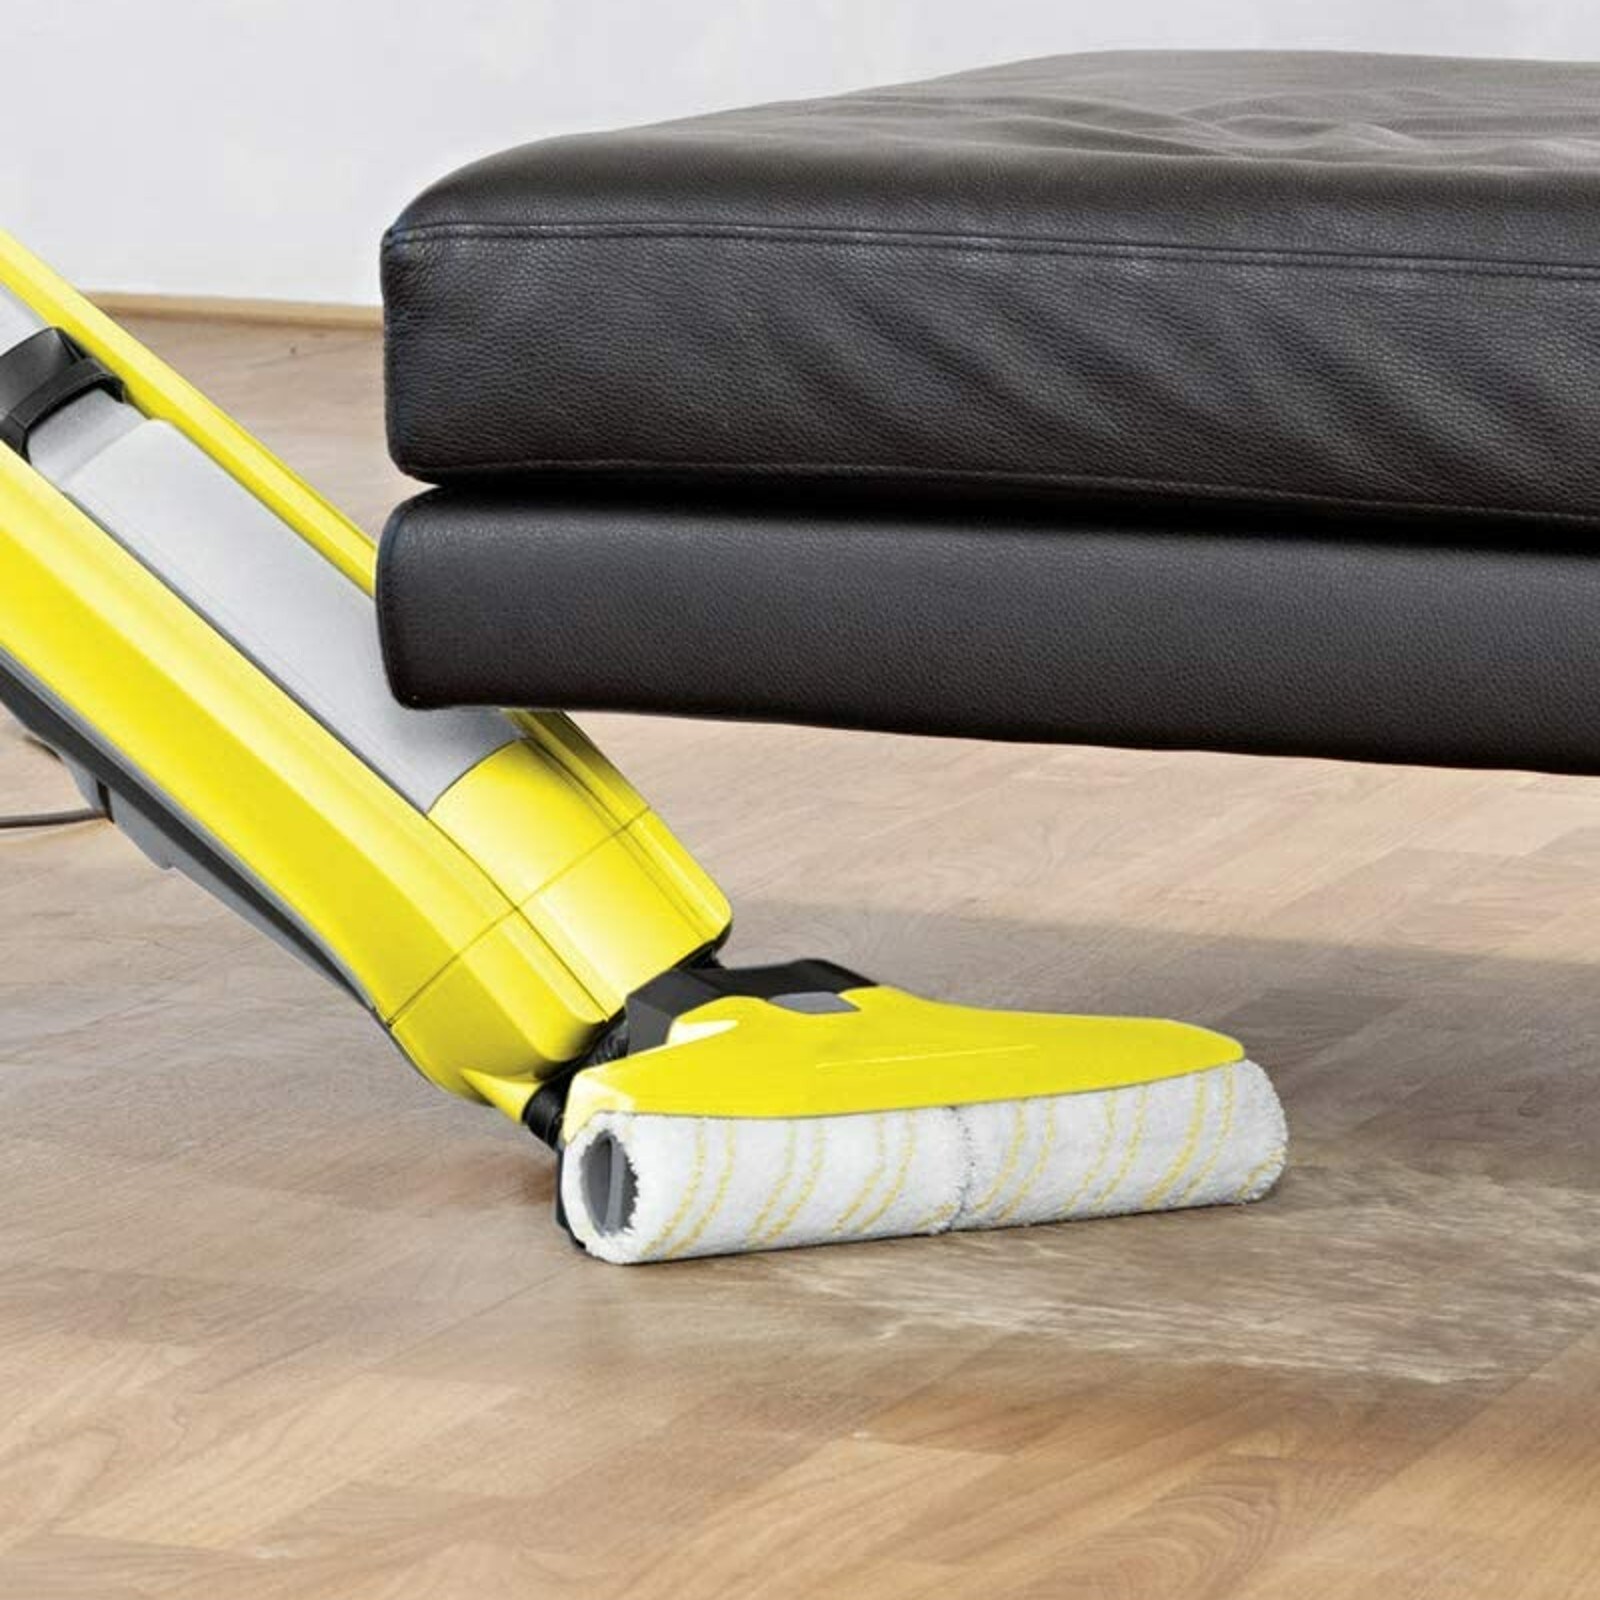 Karcher FC7 Cordless Hard Floor Cleaner Tested on Wooden Floors